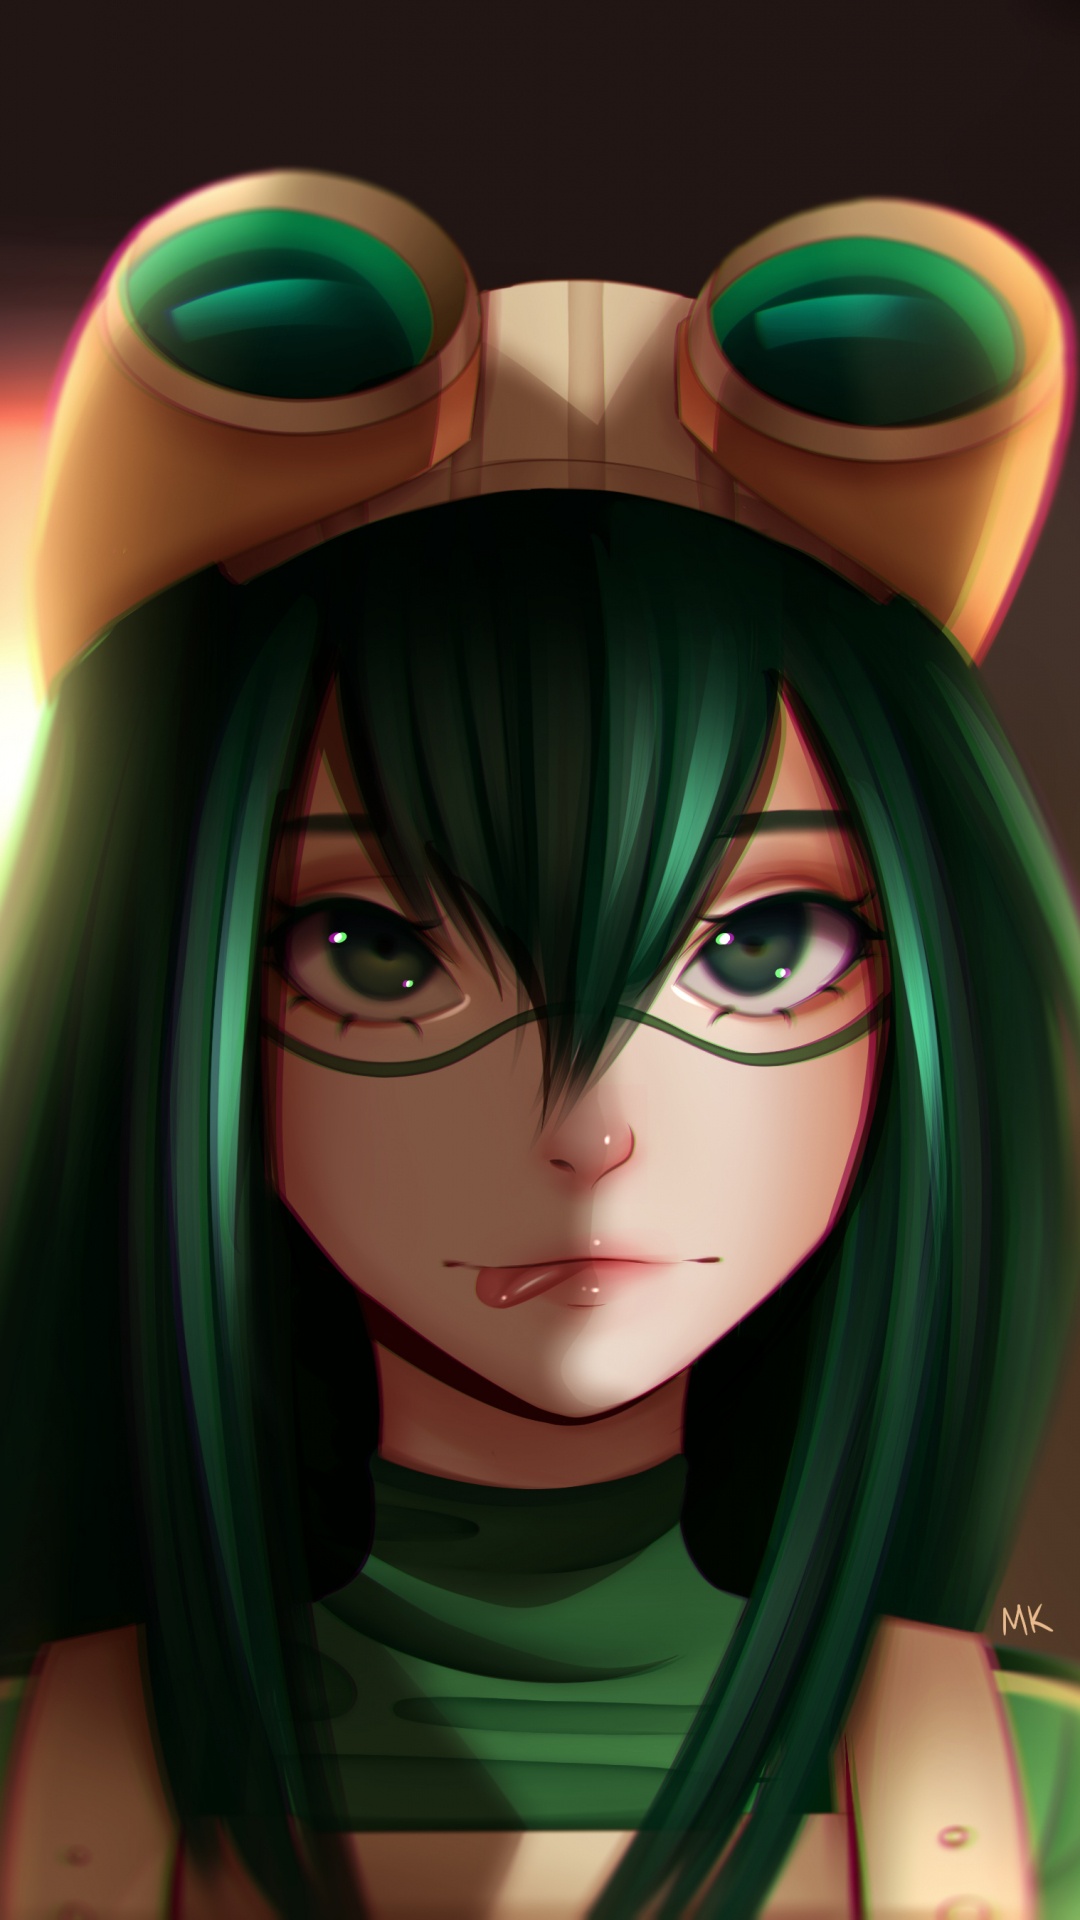 Personaje de Anime Femenino de Pelo Verde. Wallpaper in 1080x1920 Resolution